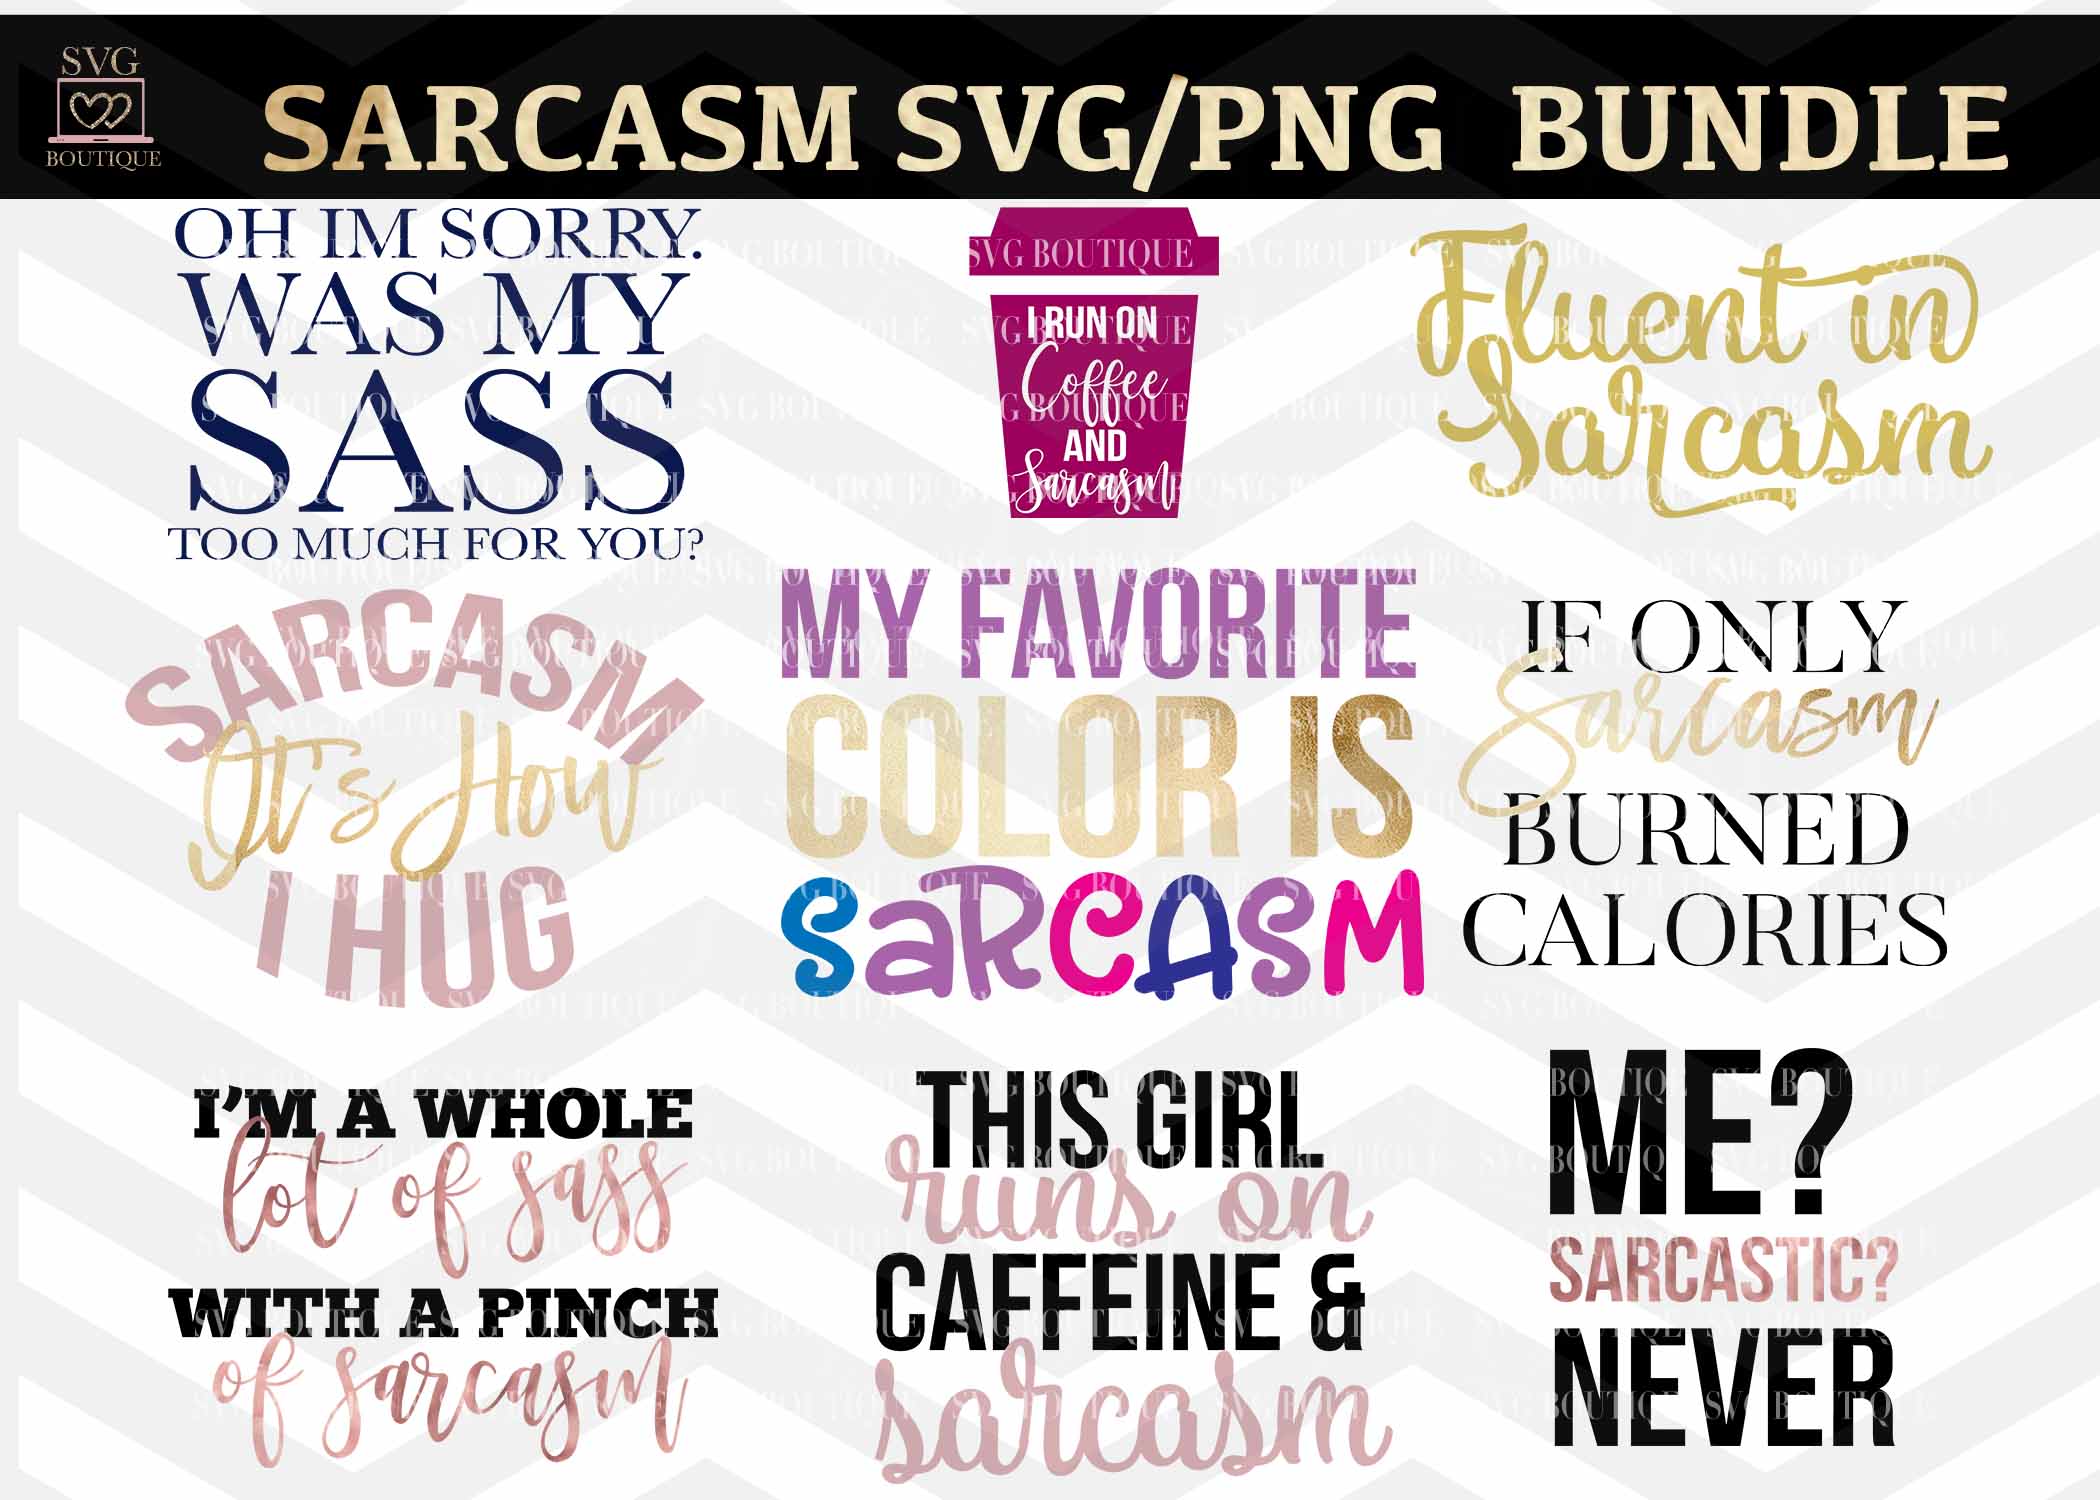 Download Sarcasm/Sassy Design Bundle - SVG PNG DFX Cutting Files